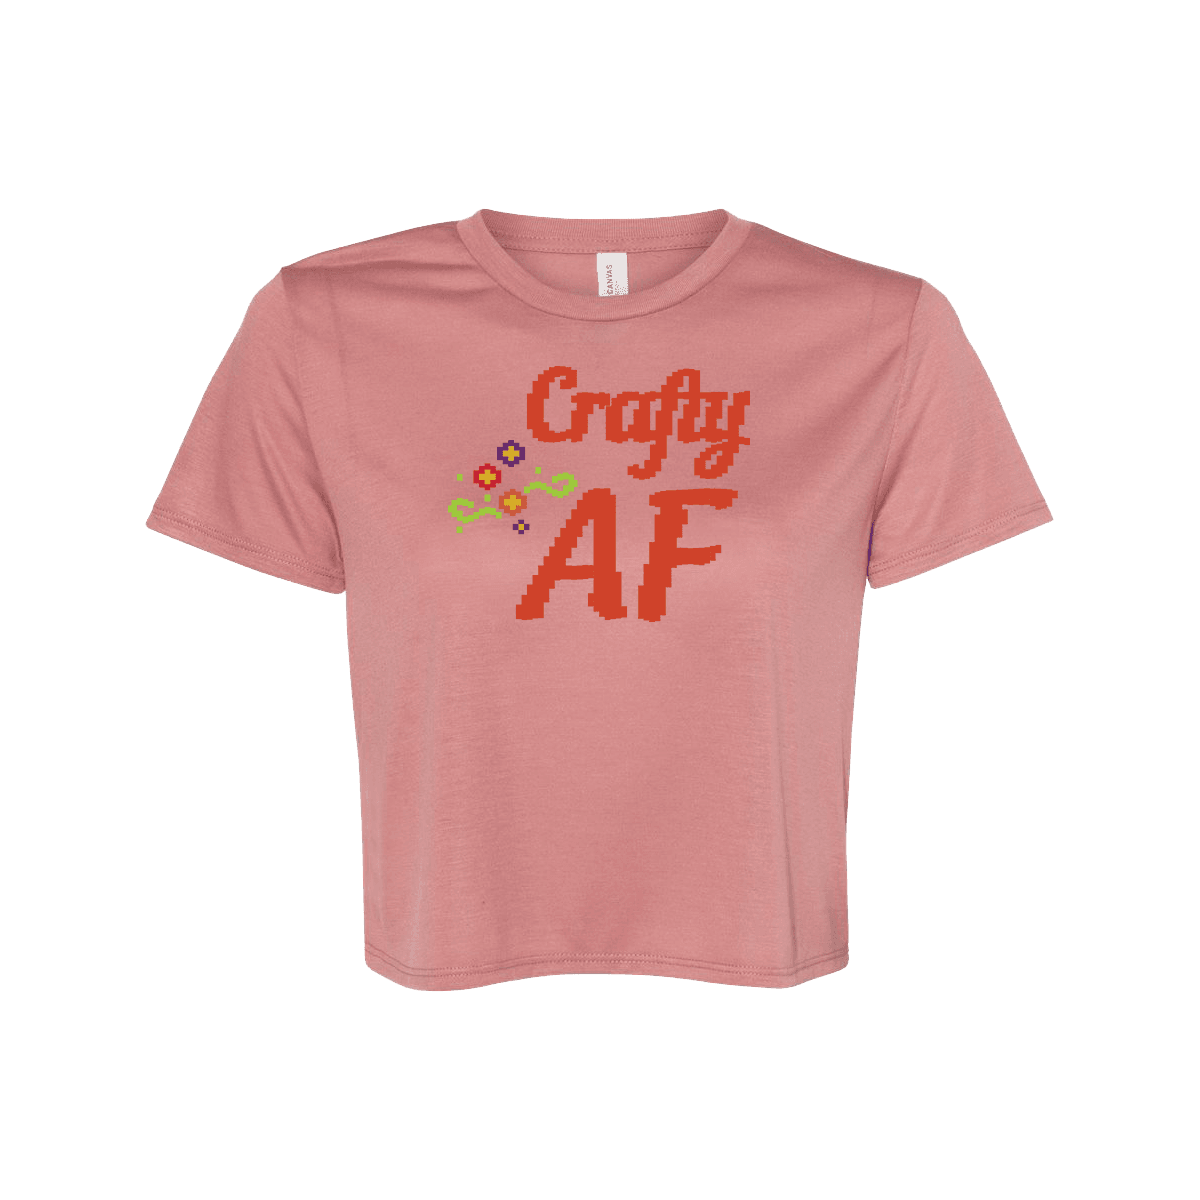 Crafty AF Crop Tee